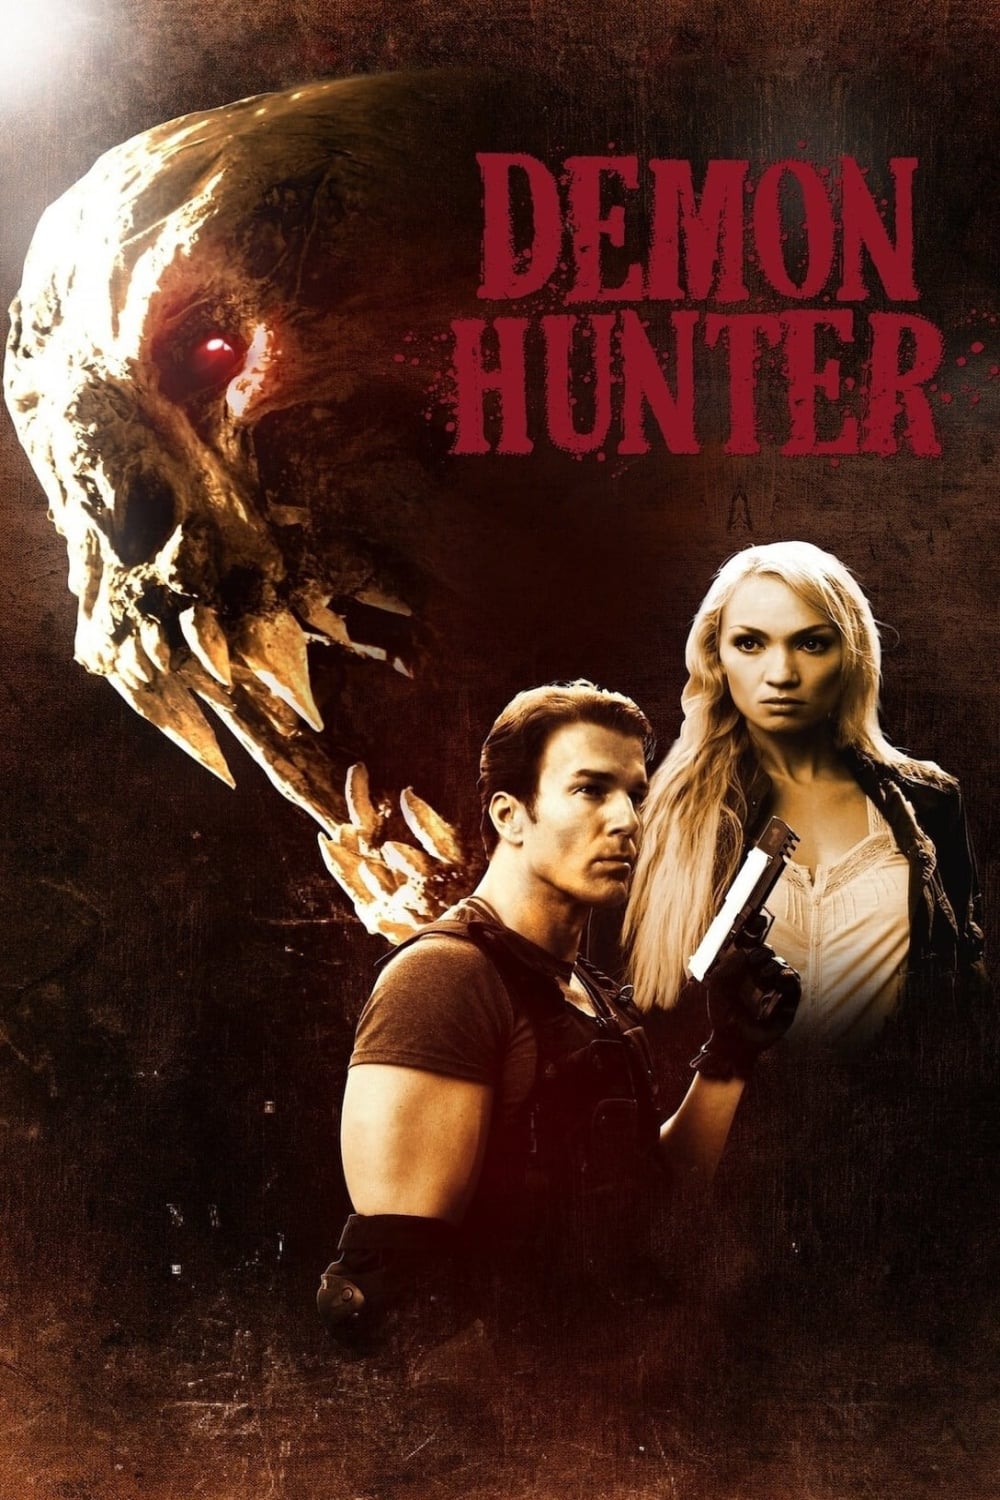 Demon Hunter (2012)